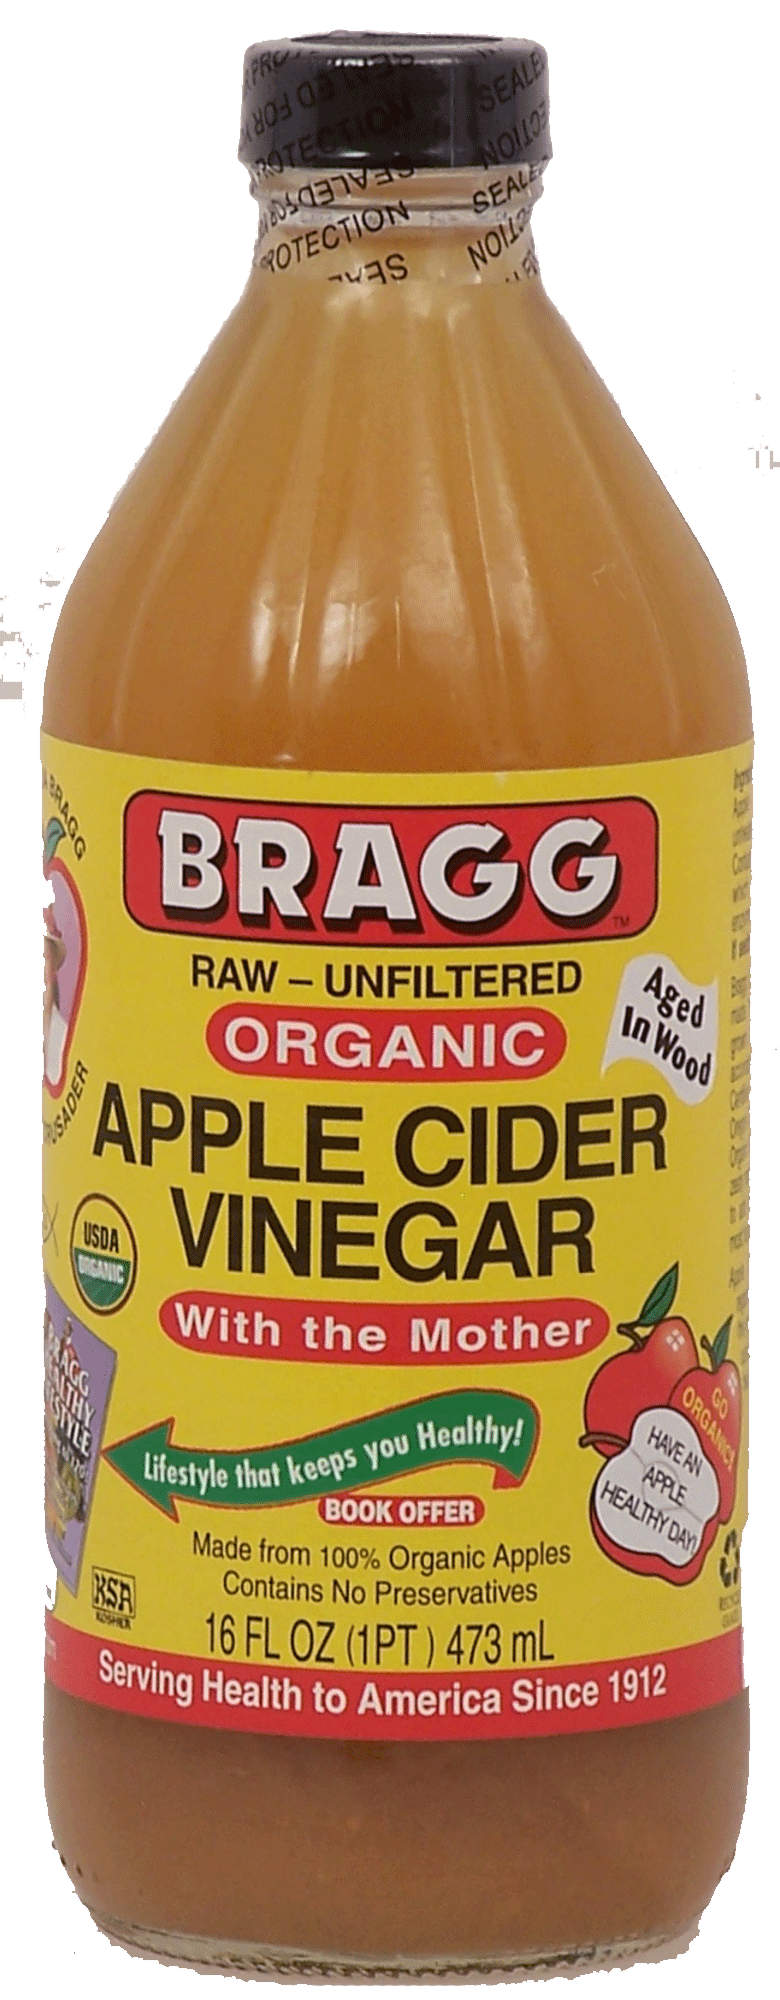 Bragg  raw - unfiltered organic apple cider vinegar Full-Size Picture